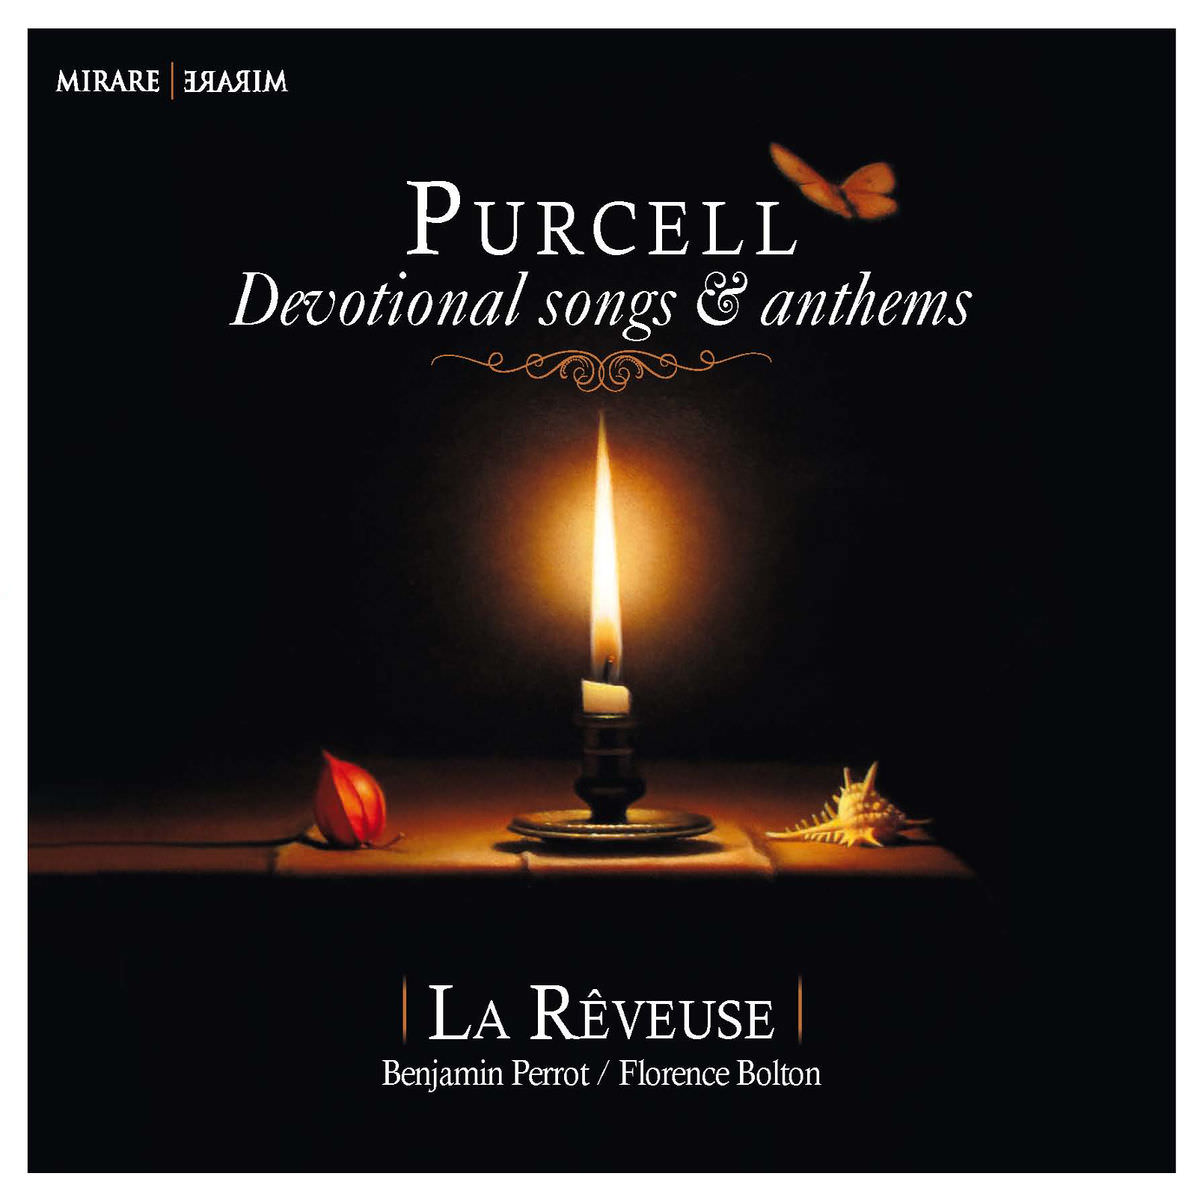 La Reveuse, Benjamin Perrot & Florence Bolton – Purcell: Devotional Songs & Anthems (2015) [FLAC 24bit/96kHz]